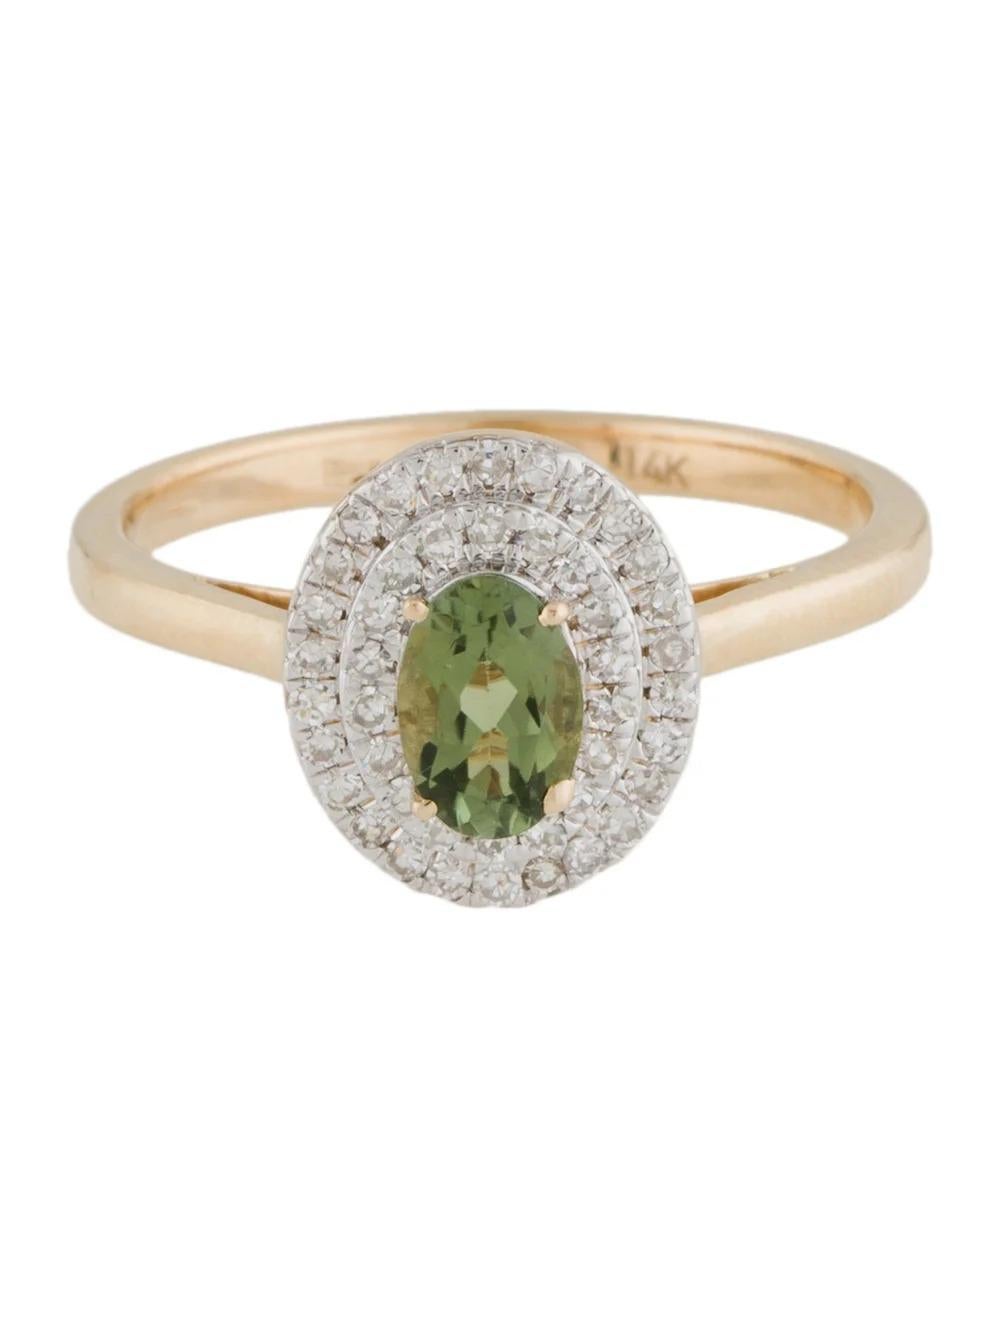 Oval Cut 14K Tourmaline & Diamond Cocktail Ring, Size 6.5 - Elegant Statement Jewelry For Sale